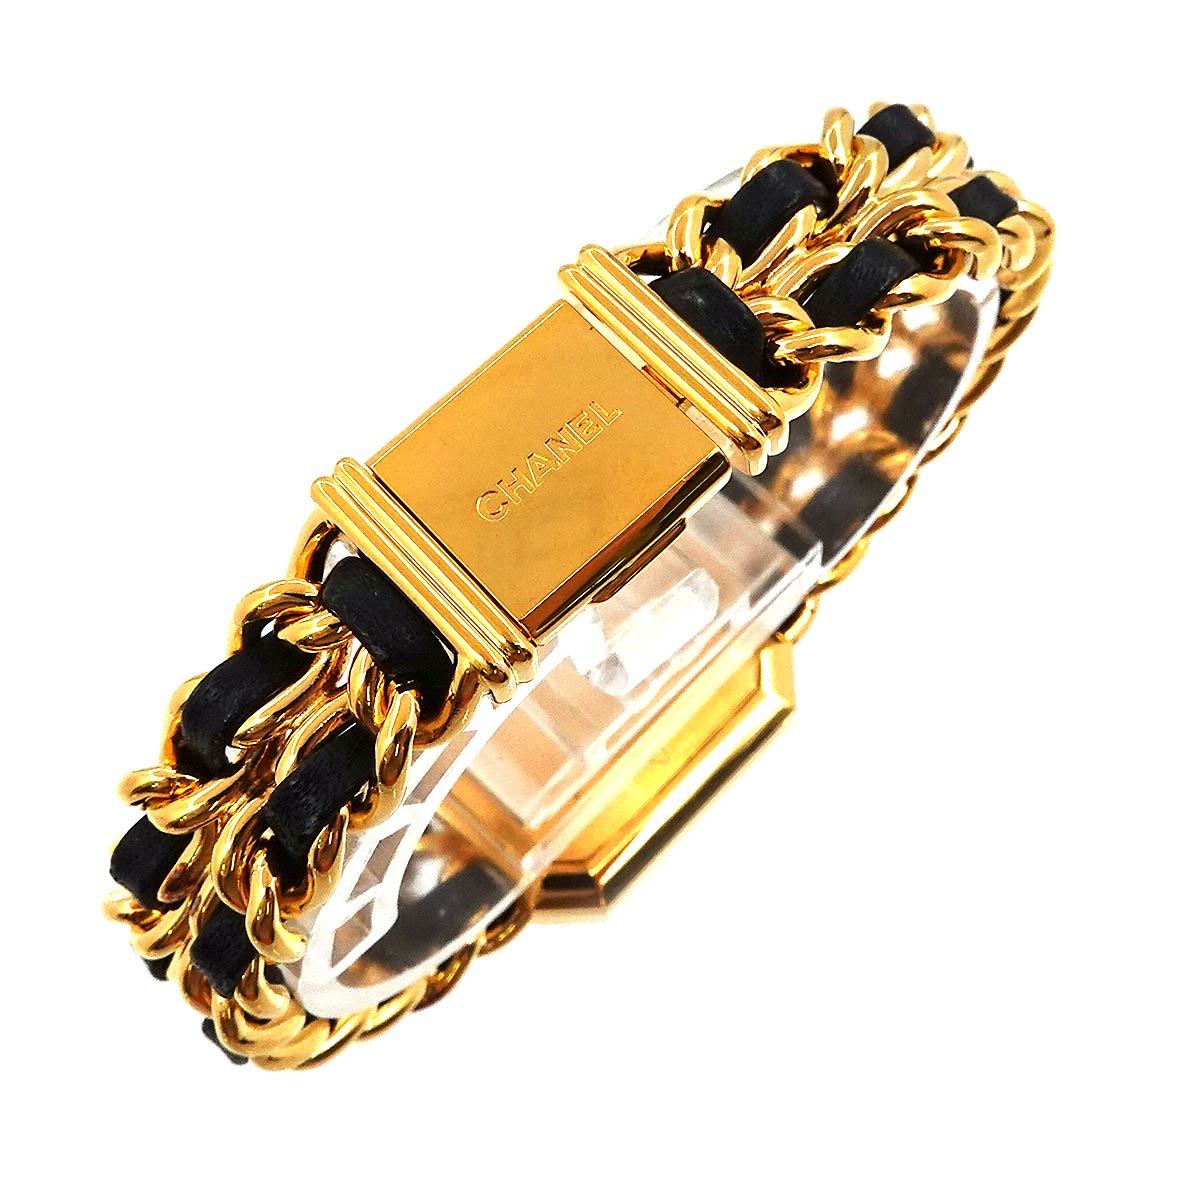  Chanel CHANEL Premiere L size H0001 Vintage lady's wristwatch black face Gold watch Premiere 90220449